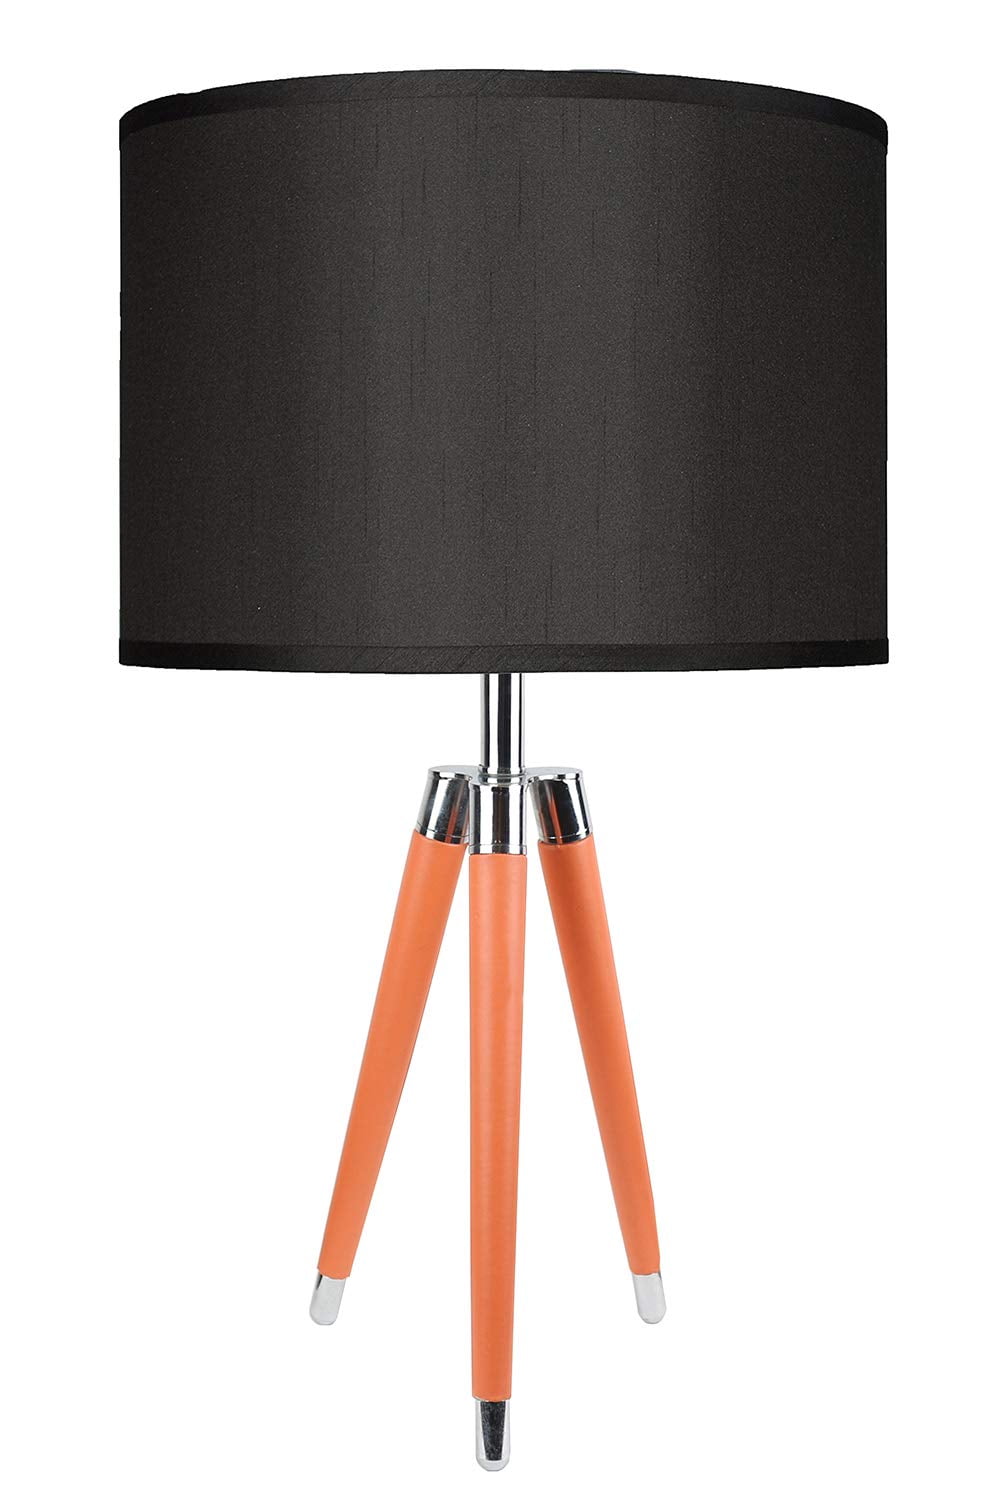 Urbanest Black Mid Century Modern Tripod Leather & Chrome Table Lamp 